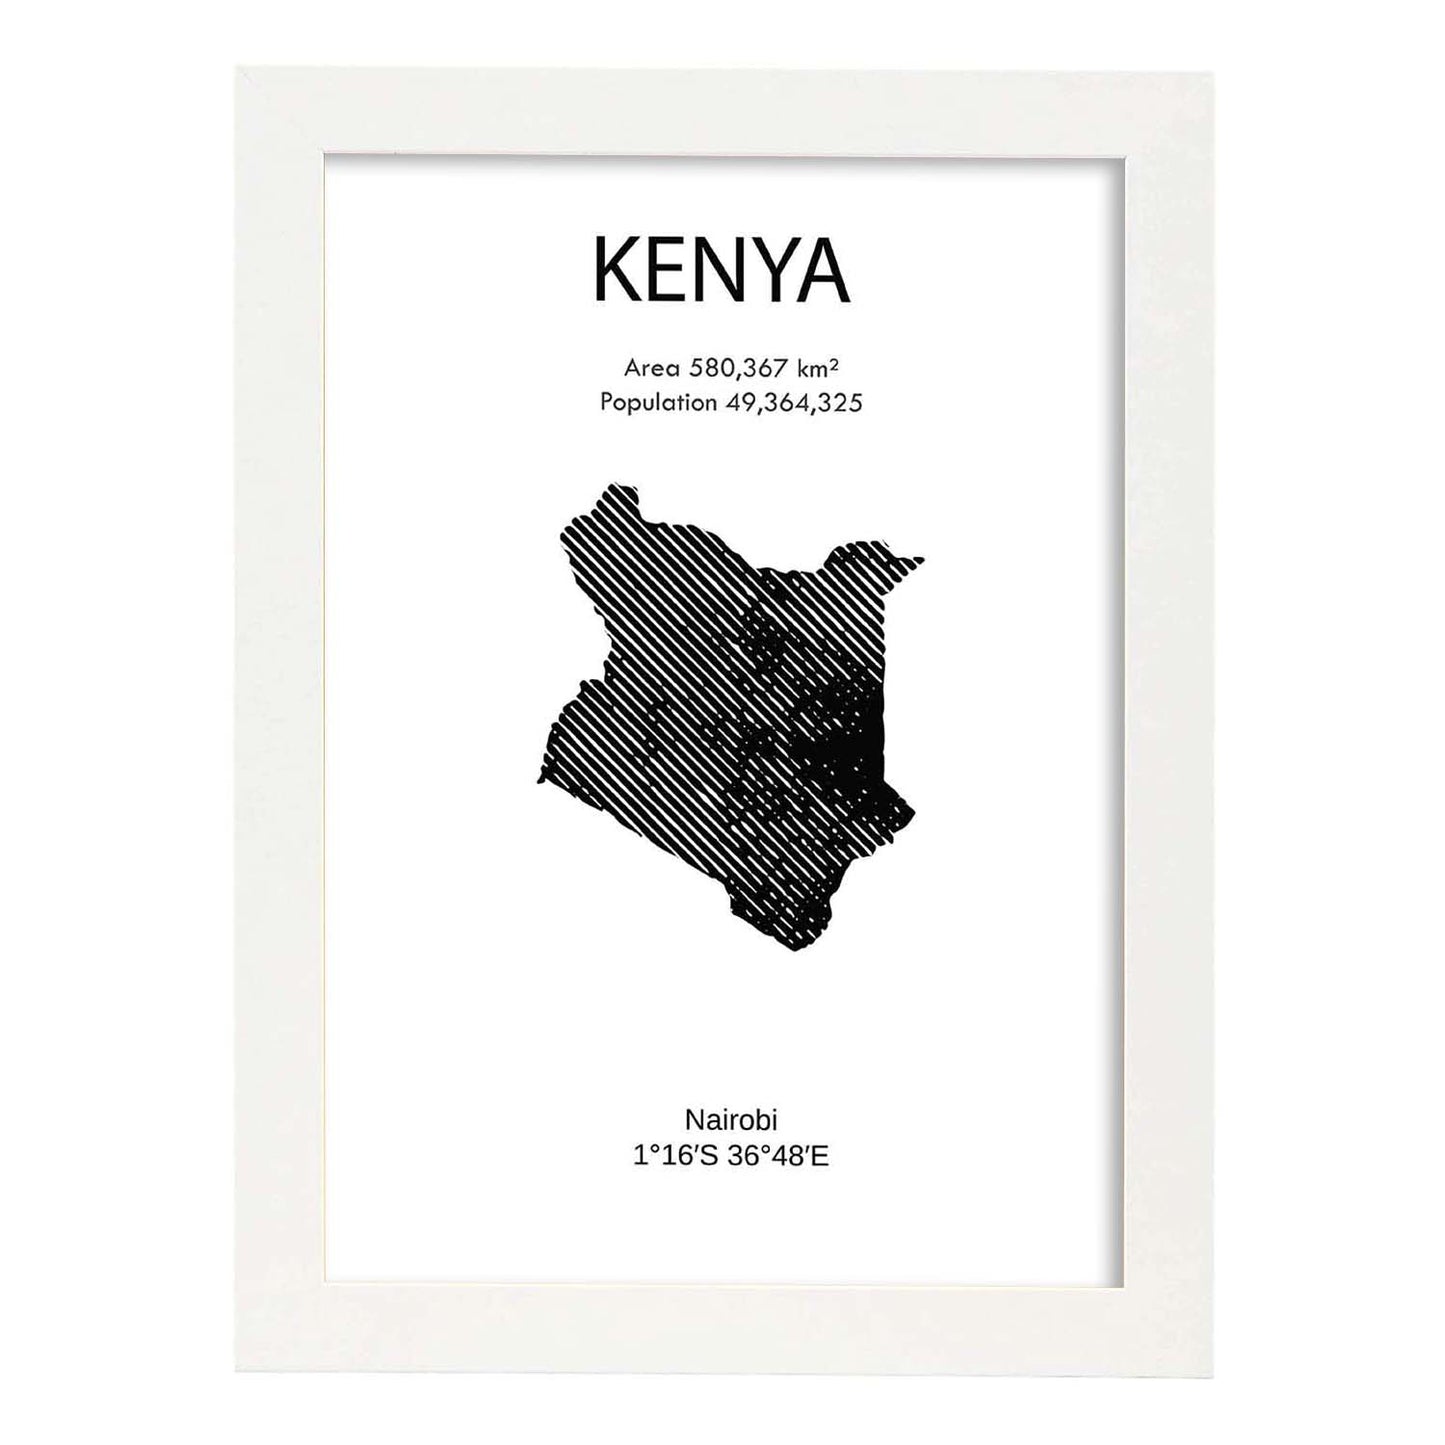 Poster de Kenya. Láminas de paises y continentes del mundo.-Artwork-Nacnic-A4-Marco Blanco-Nacnic Estudio SL